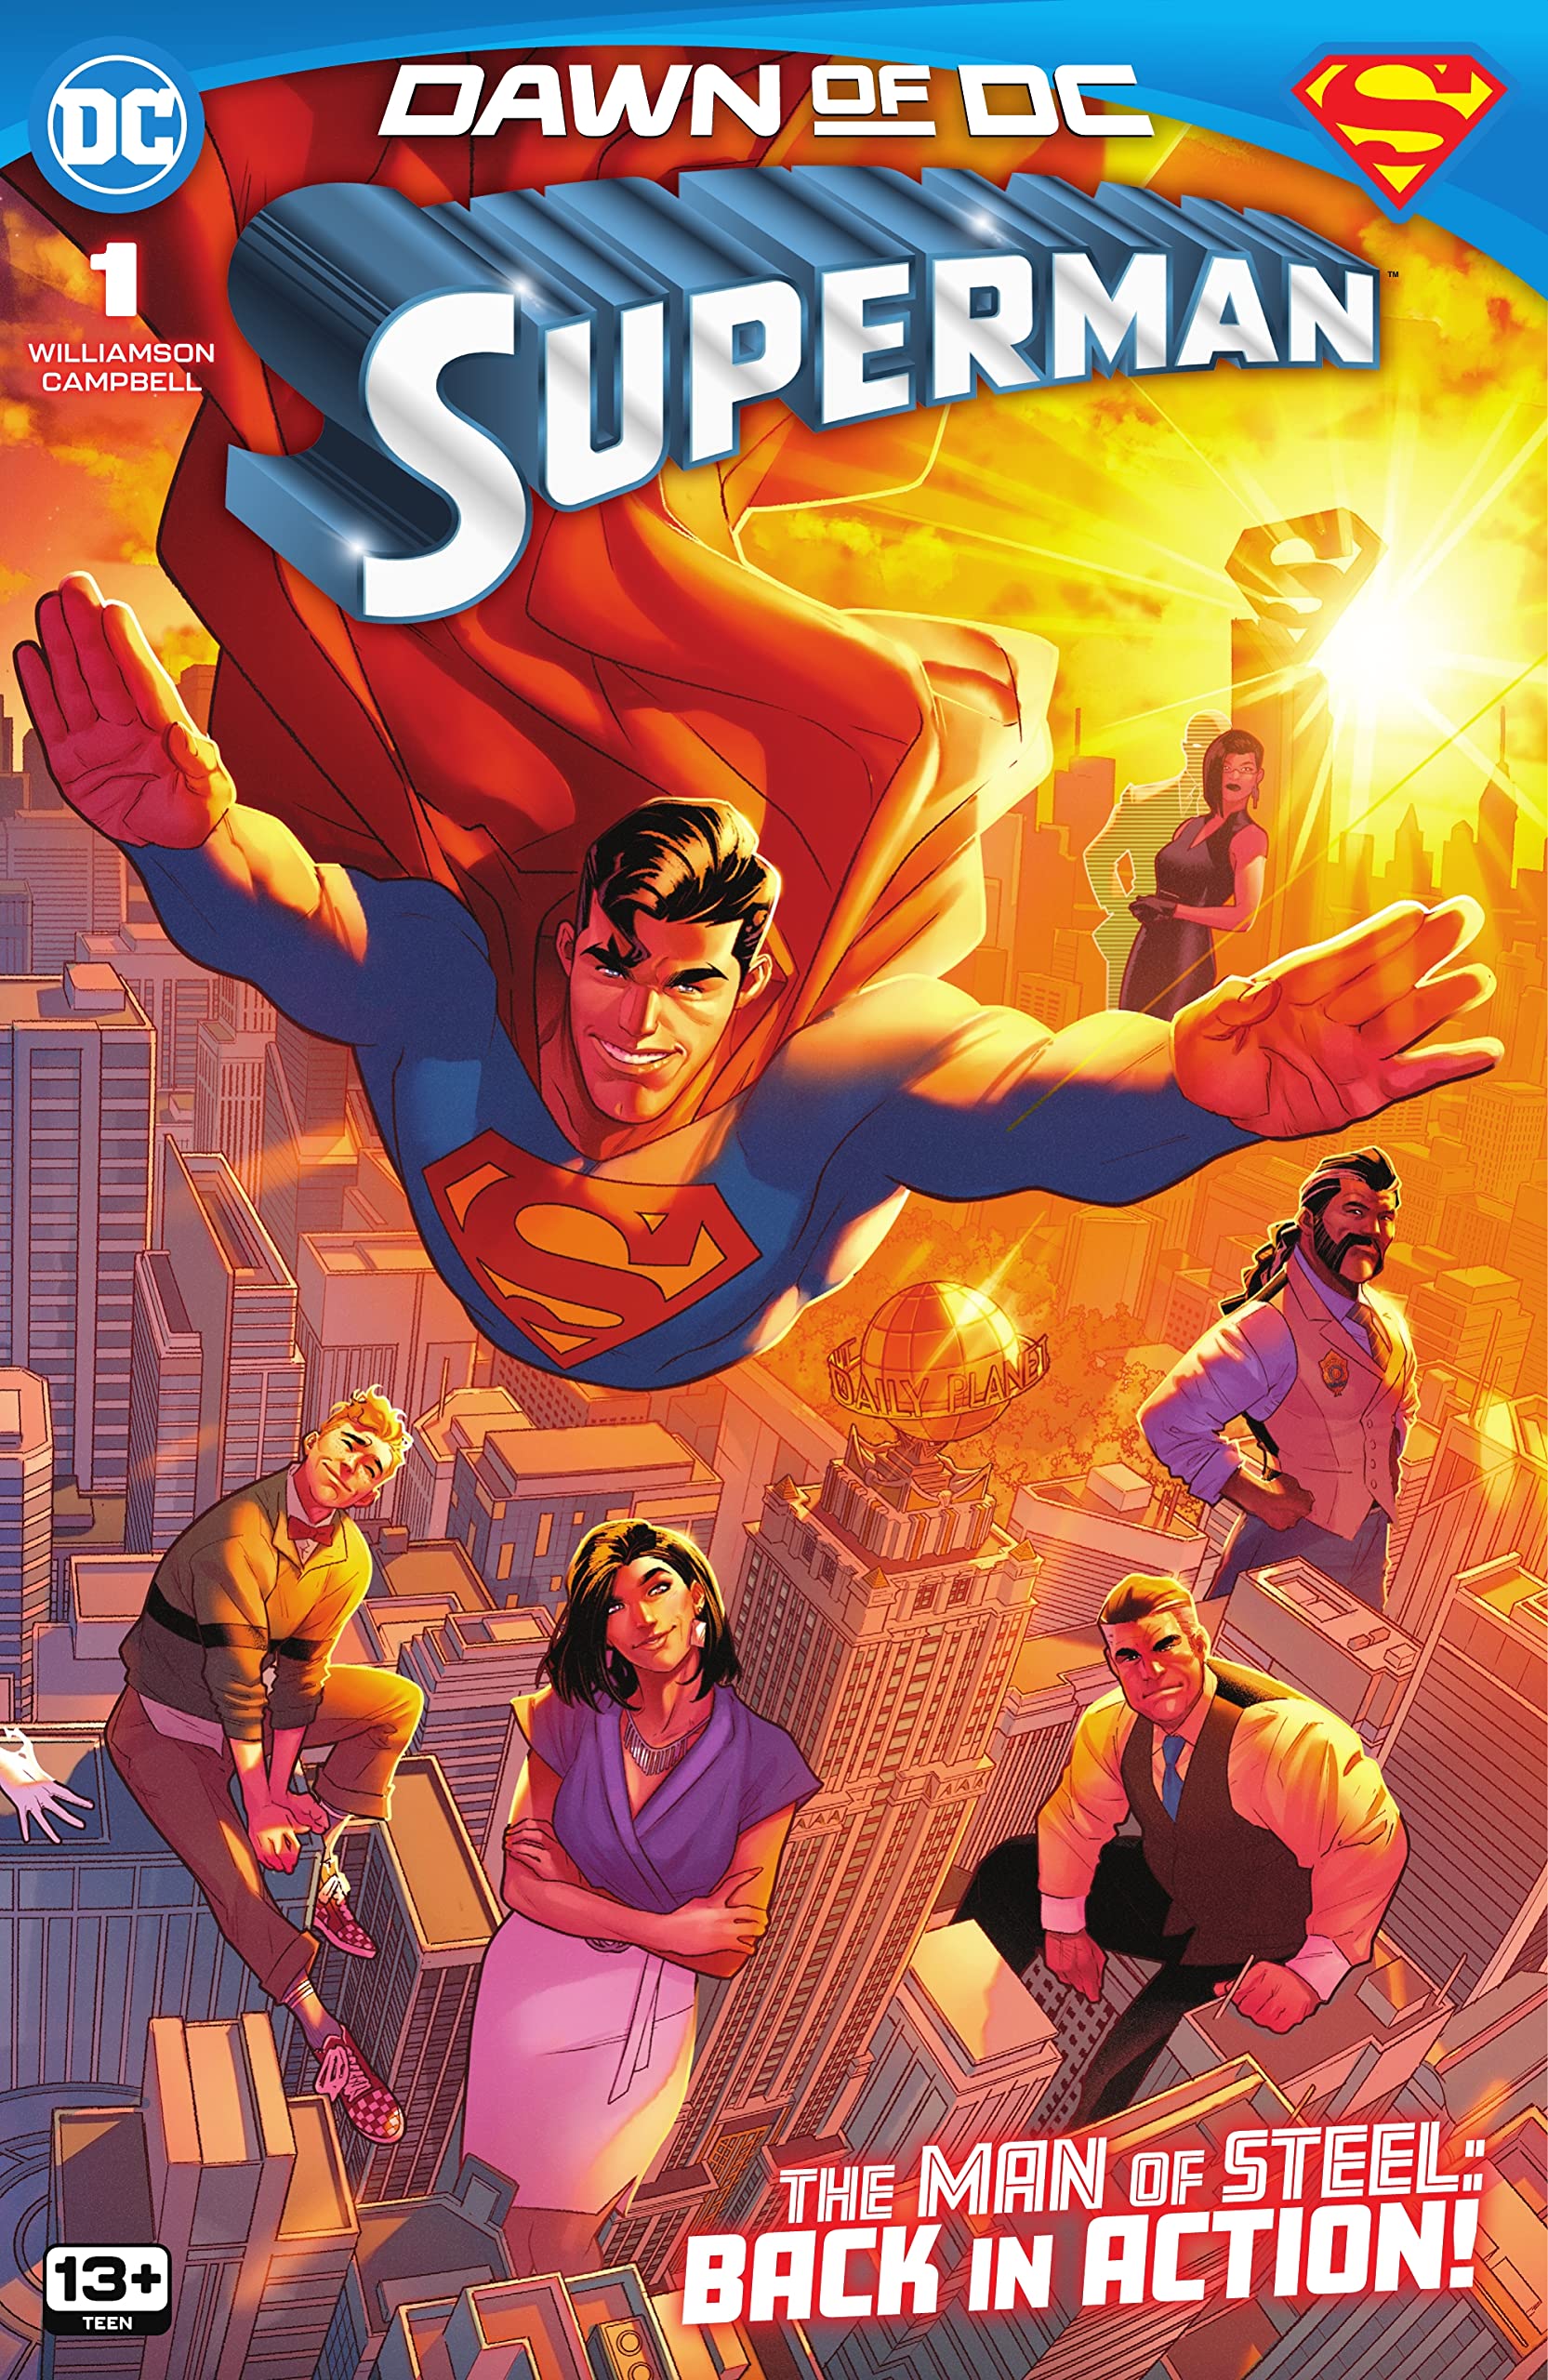 Superman, Vol. 6: Imperius Lex by Peter J. Tomasi